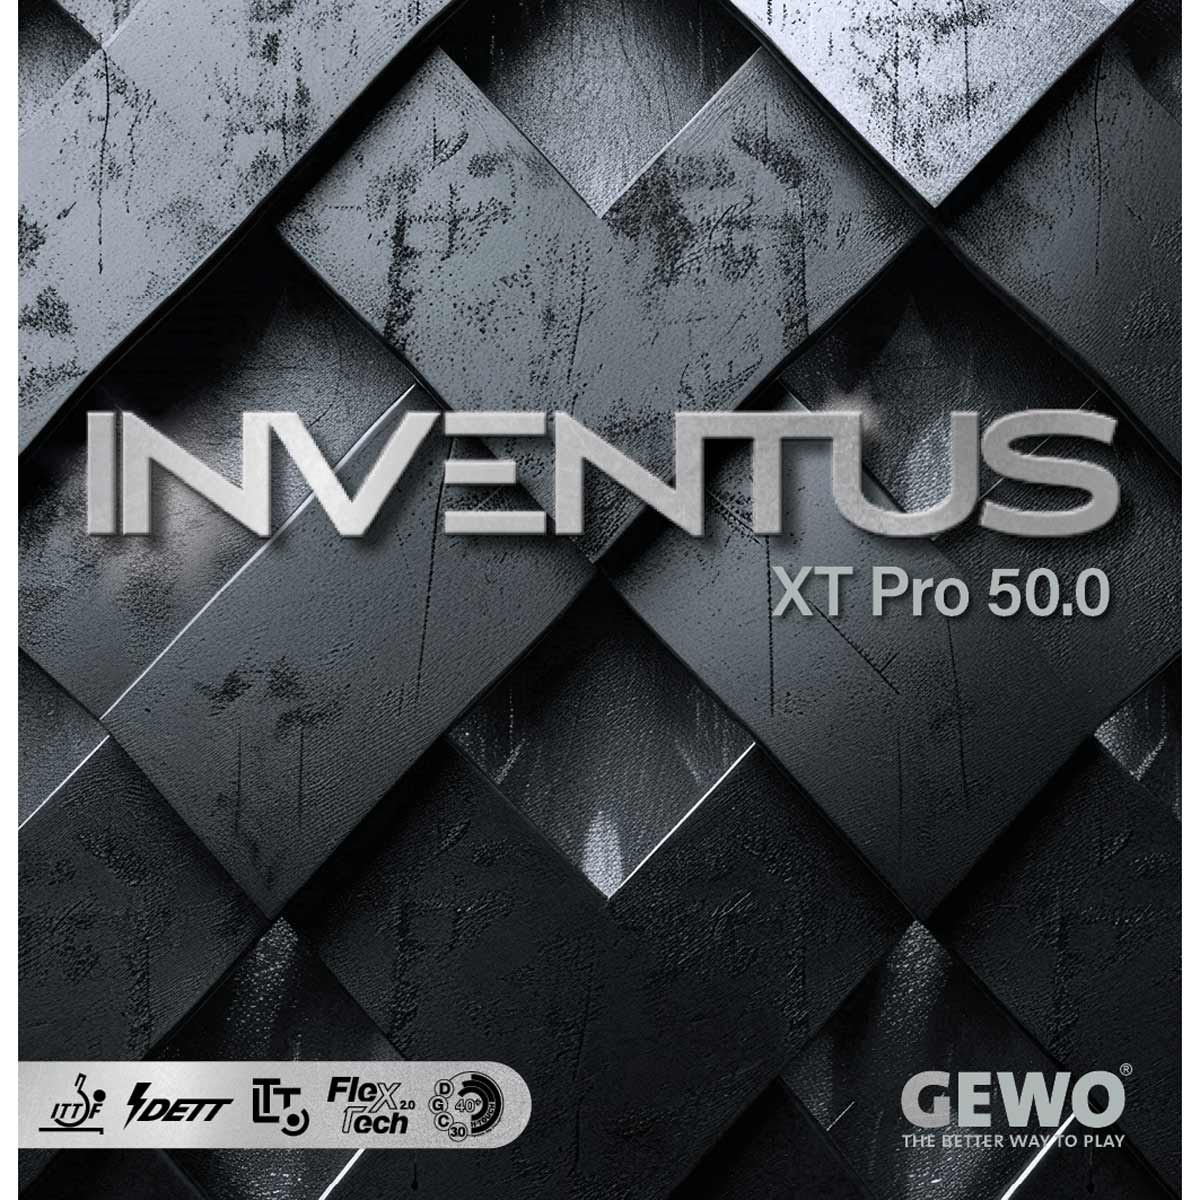 GEWO Rubber Inventus XT Pro 50.0